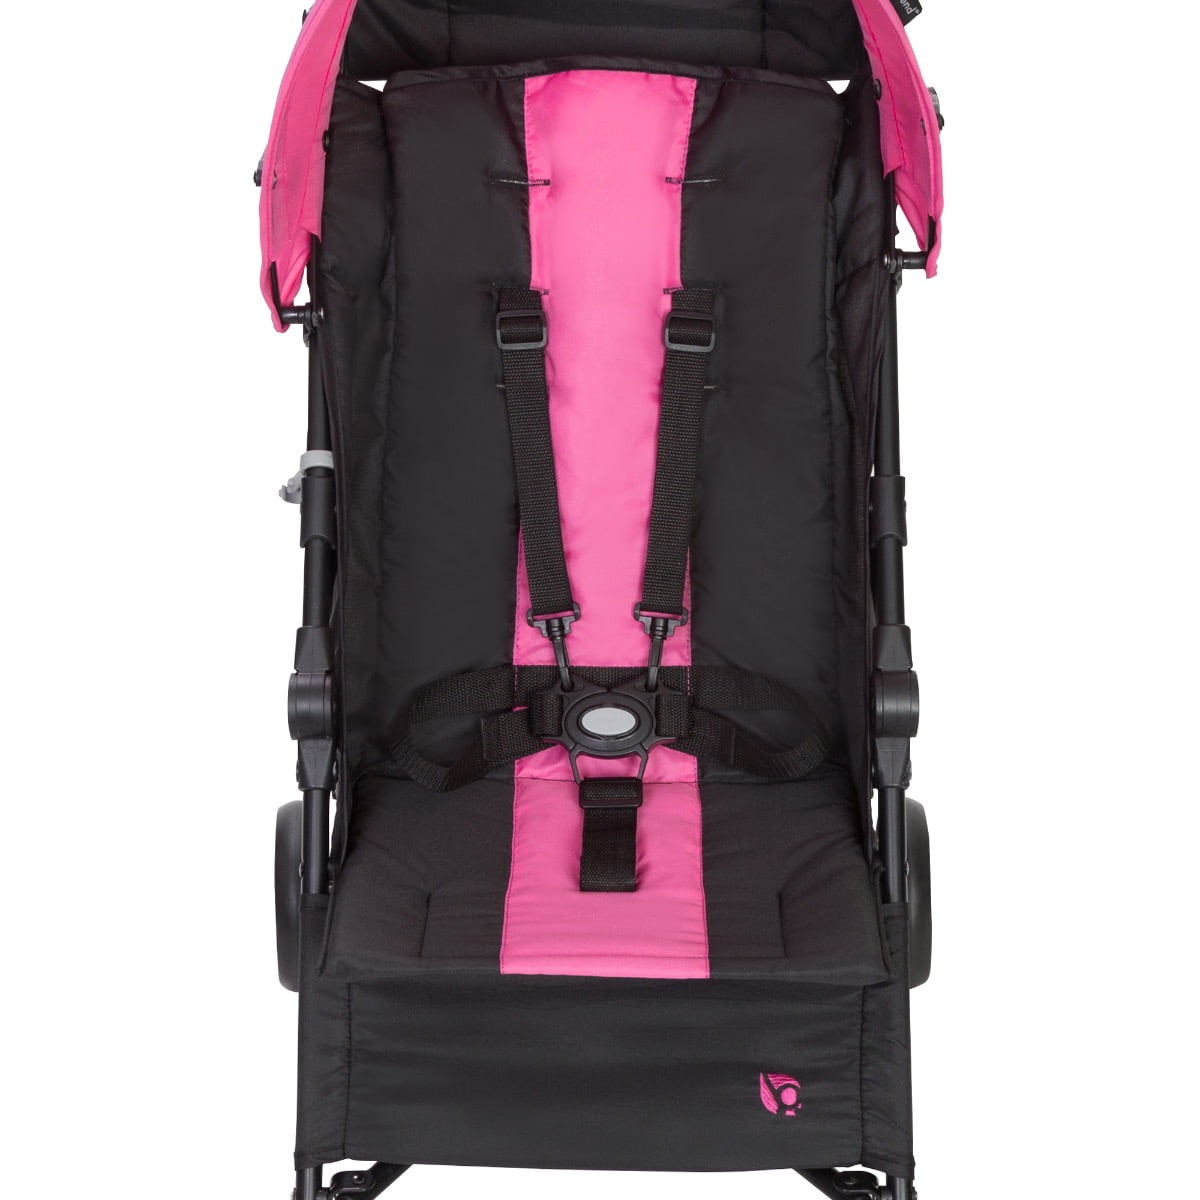 baby trend rocket stroller